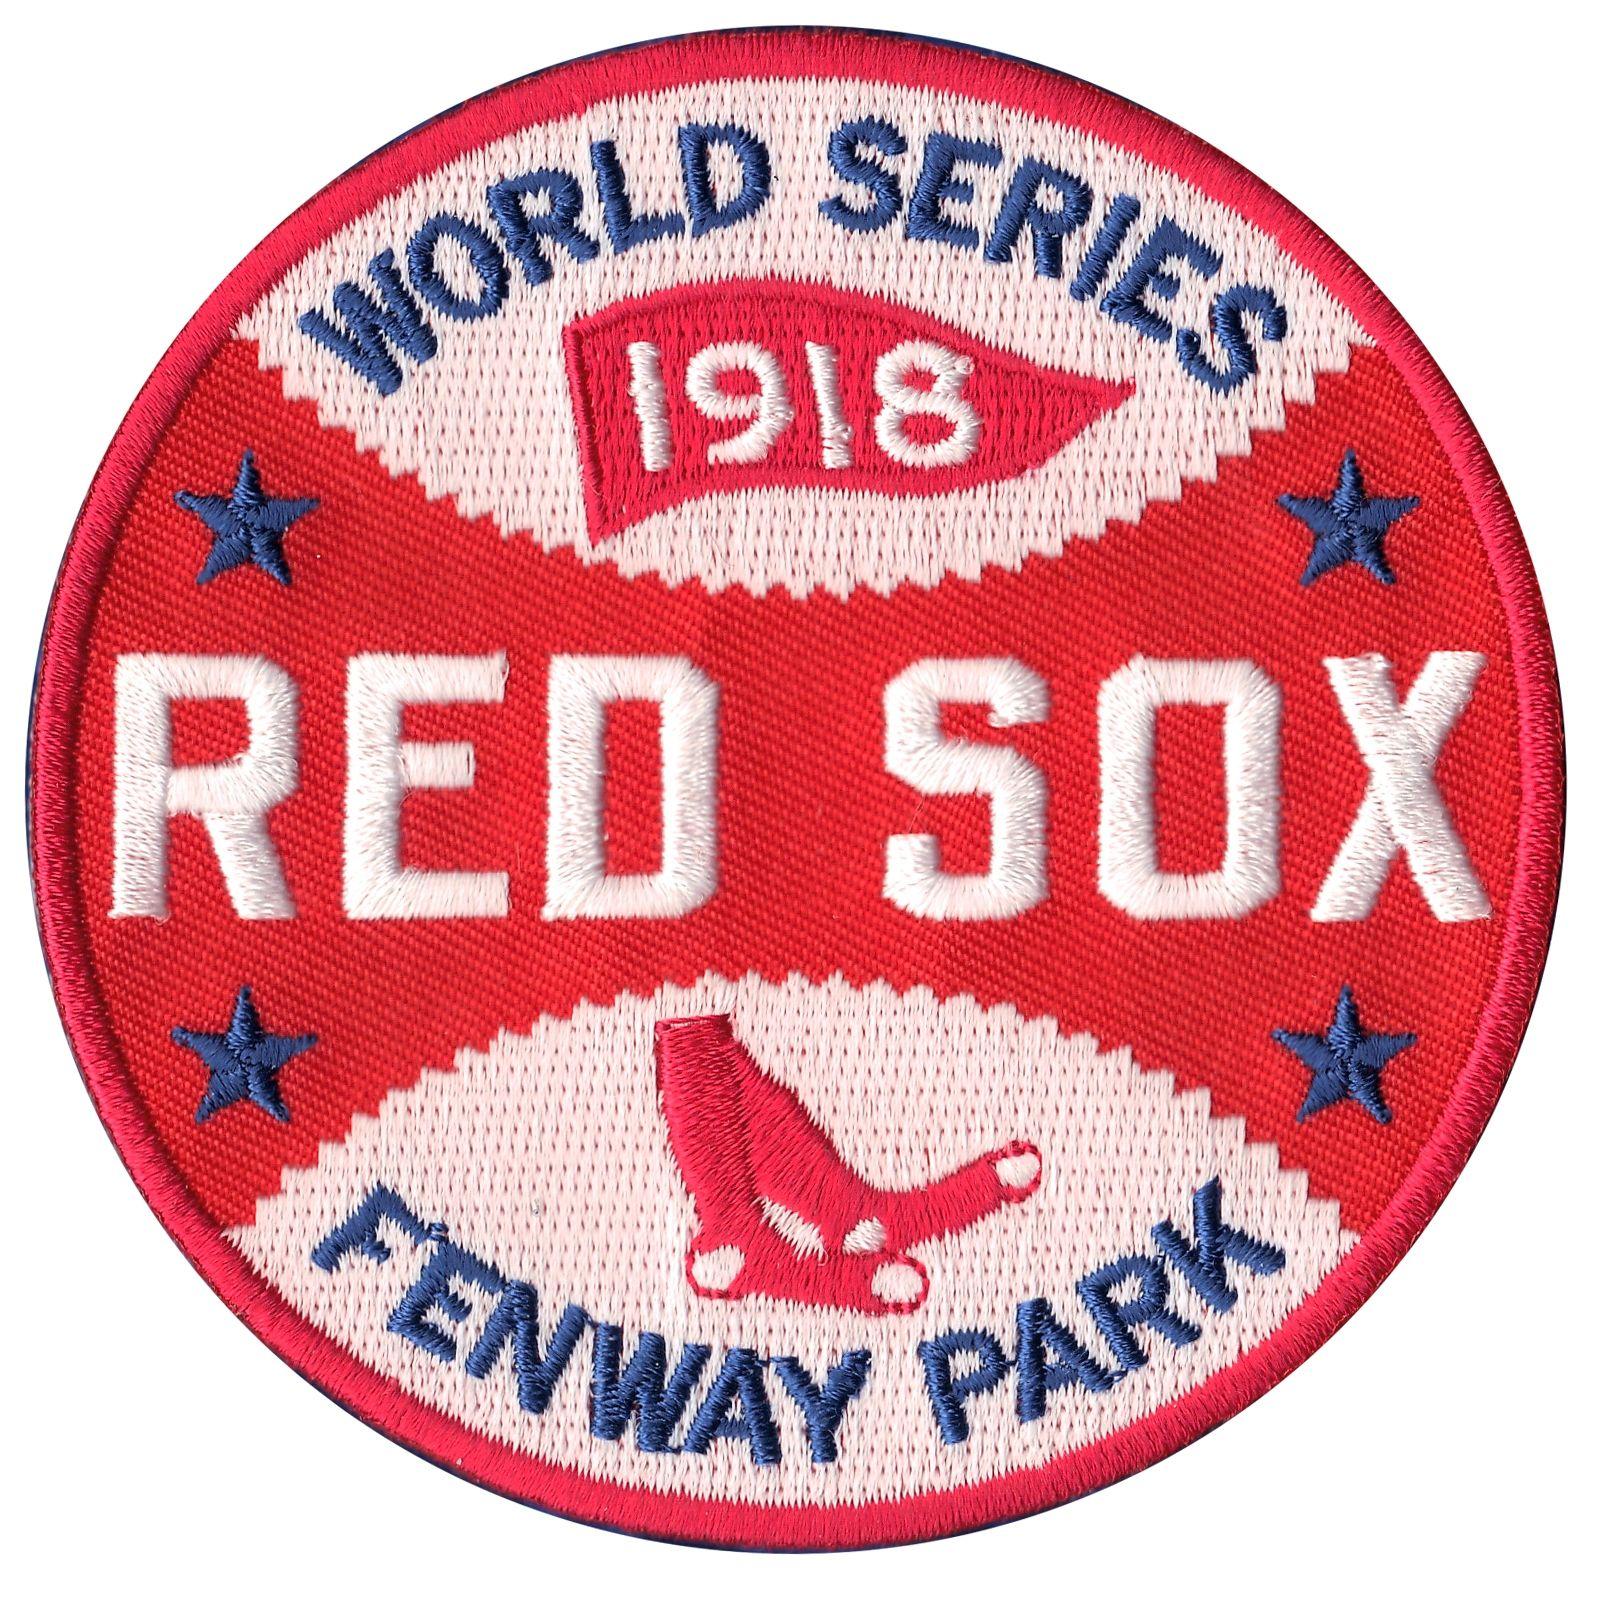 Red Sox Championship Logo - Boston Red Sox MLB World Series Team Champions Logo Jersey